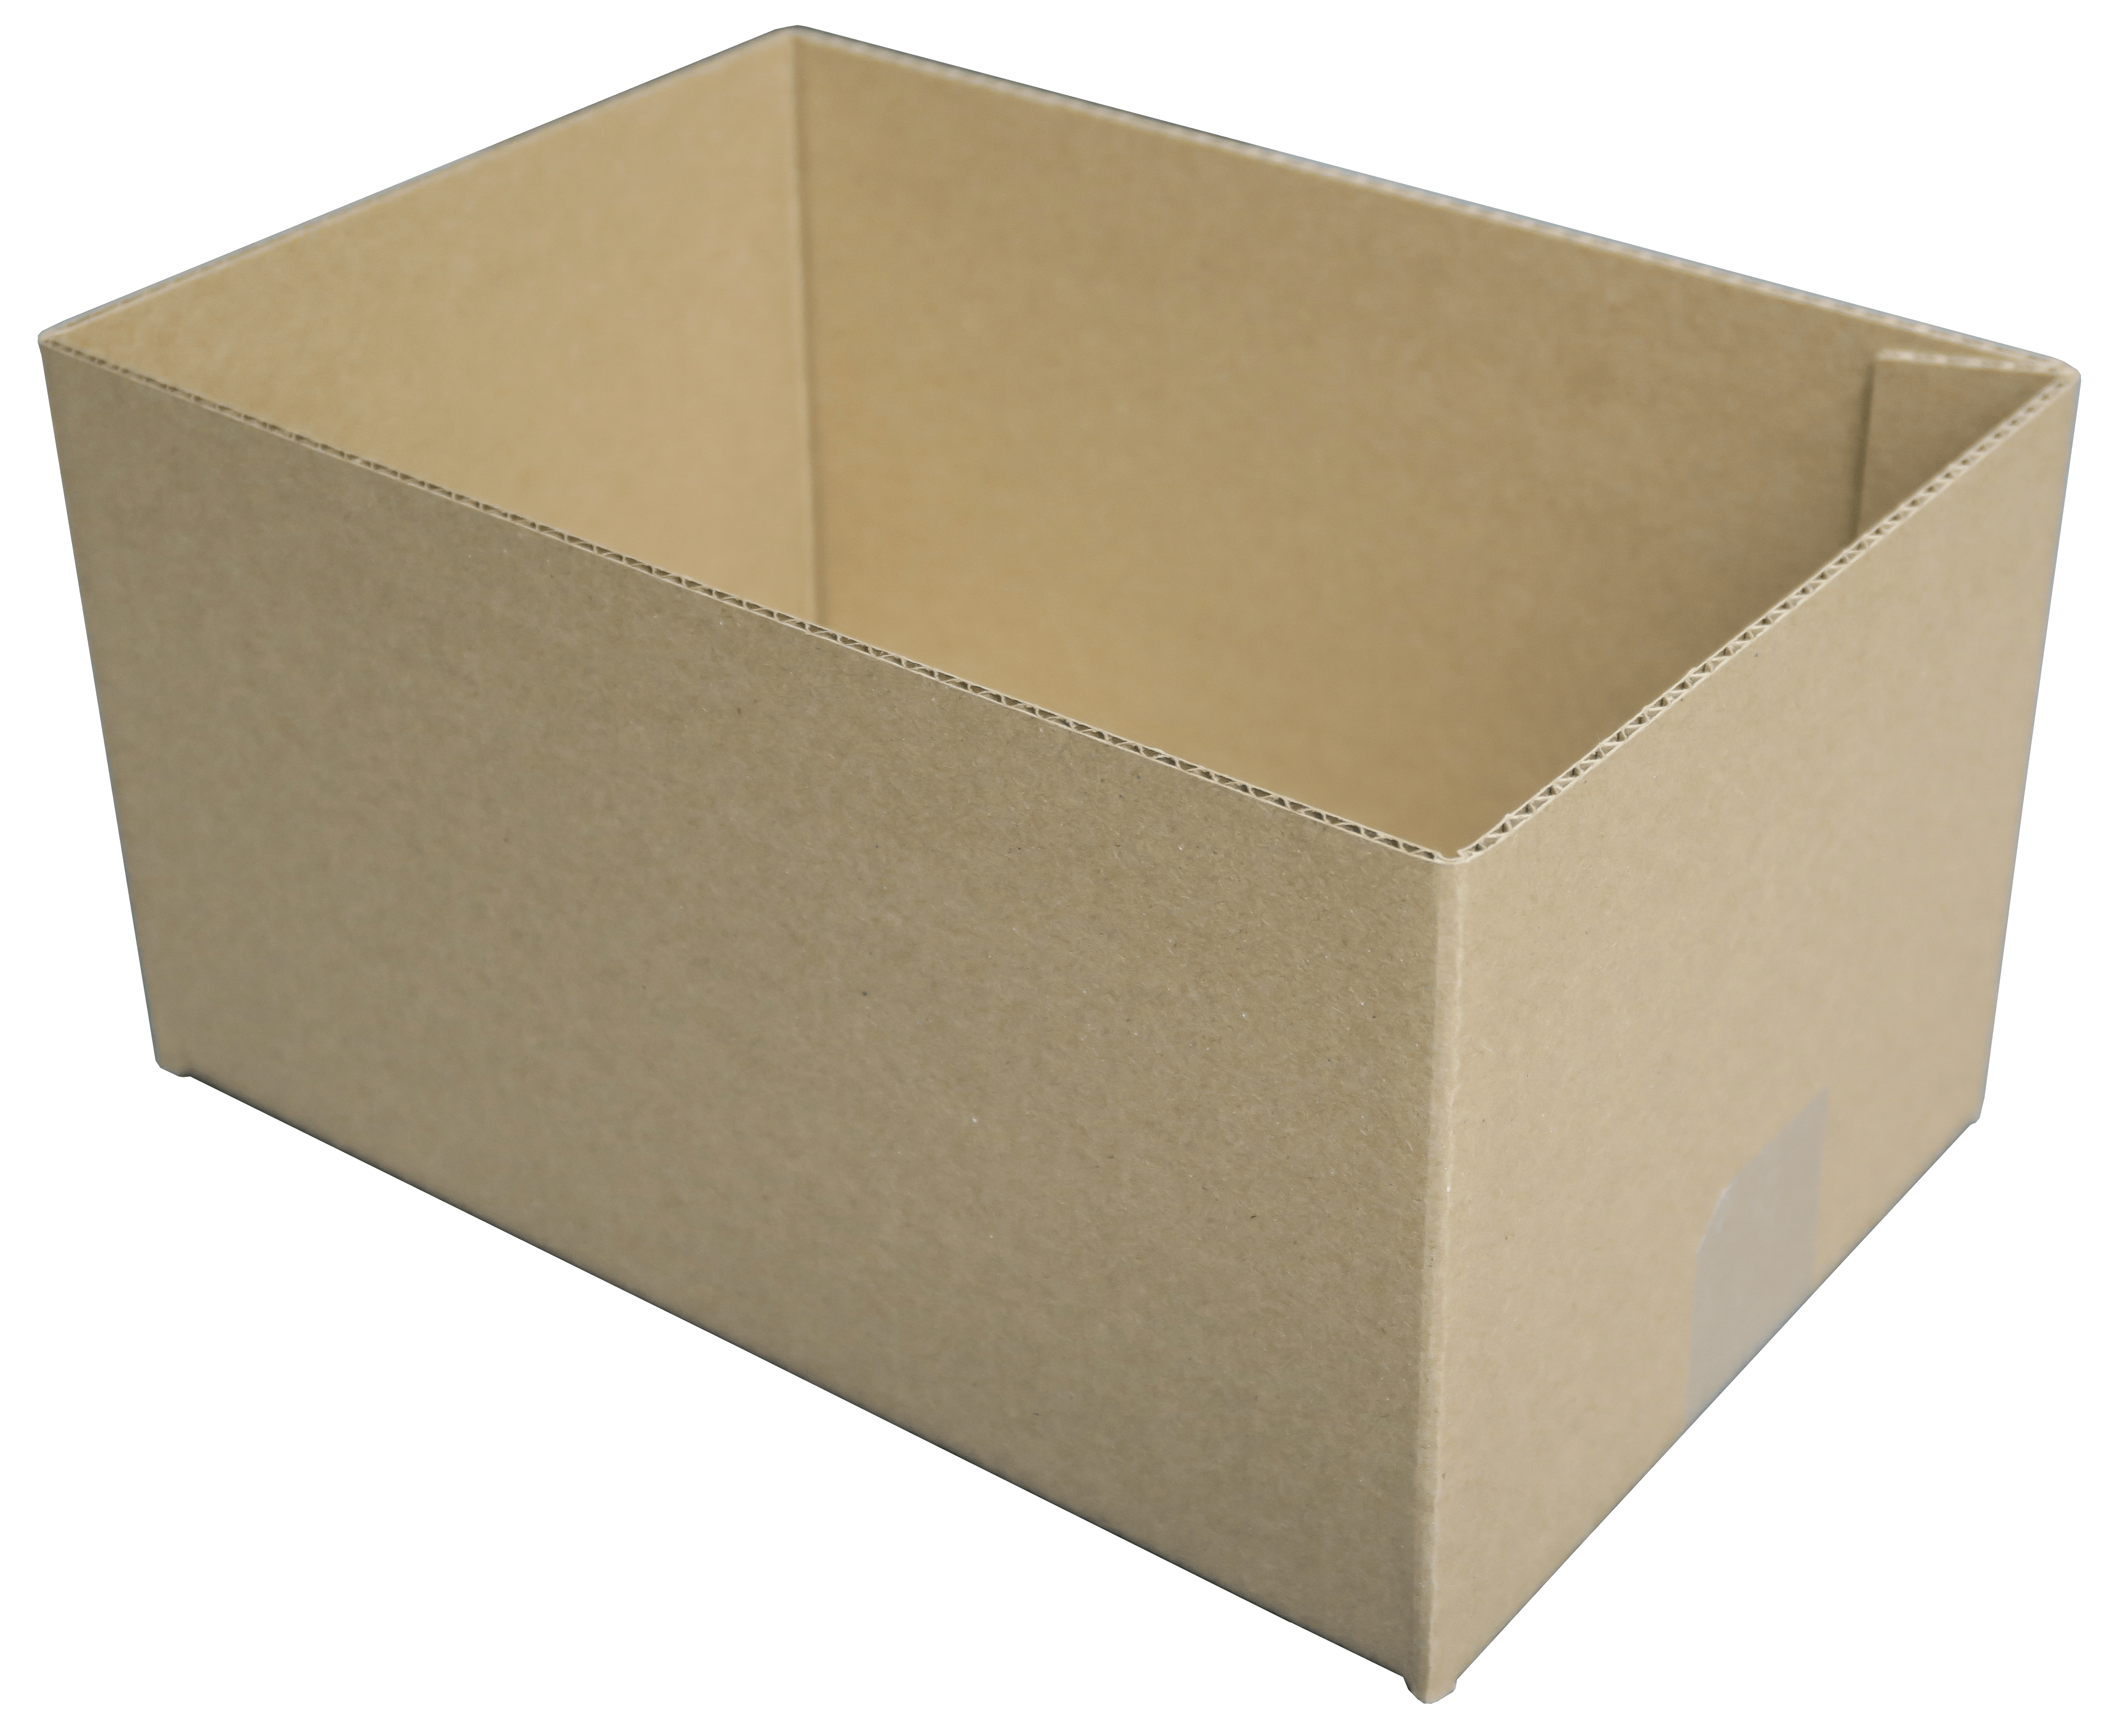 30x 30x20x20" 762x508x508mm Cardboard Boxes Single Wall Postal Posting Mailing 